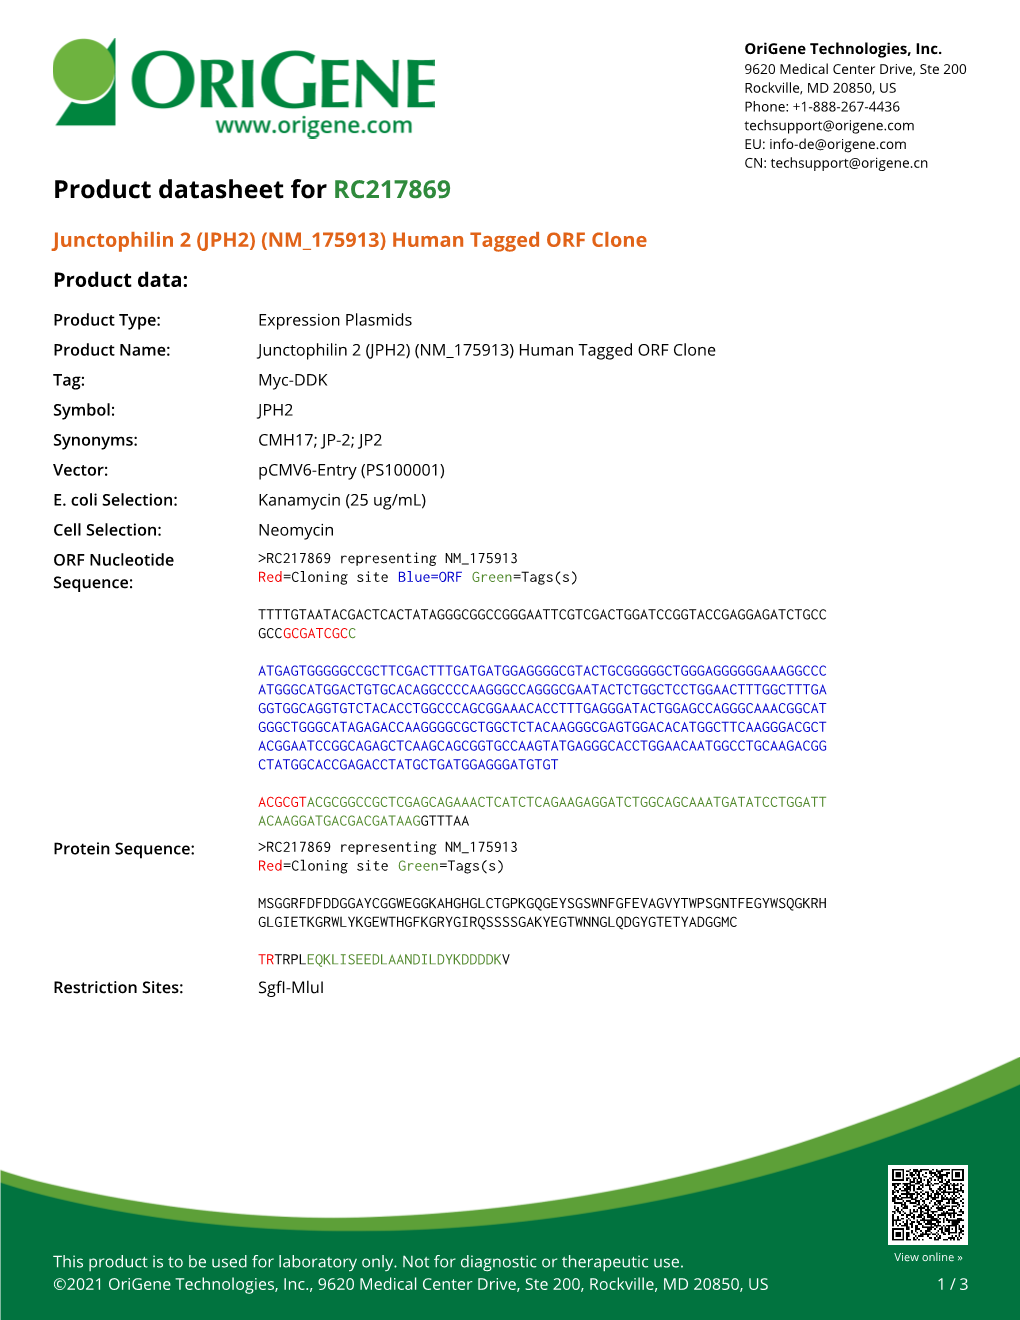 (JPH2) (NM 175913) Human Tagged ORF Clone Product Data